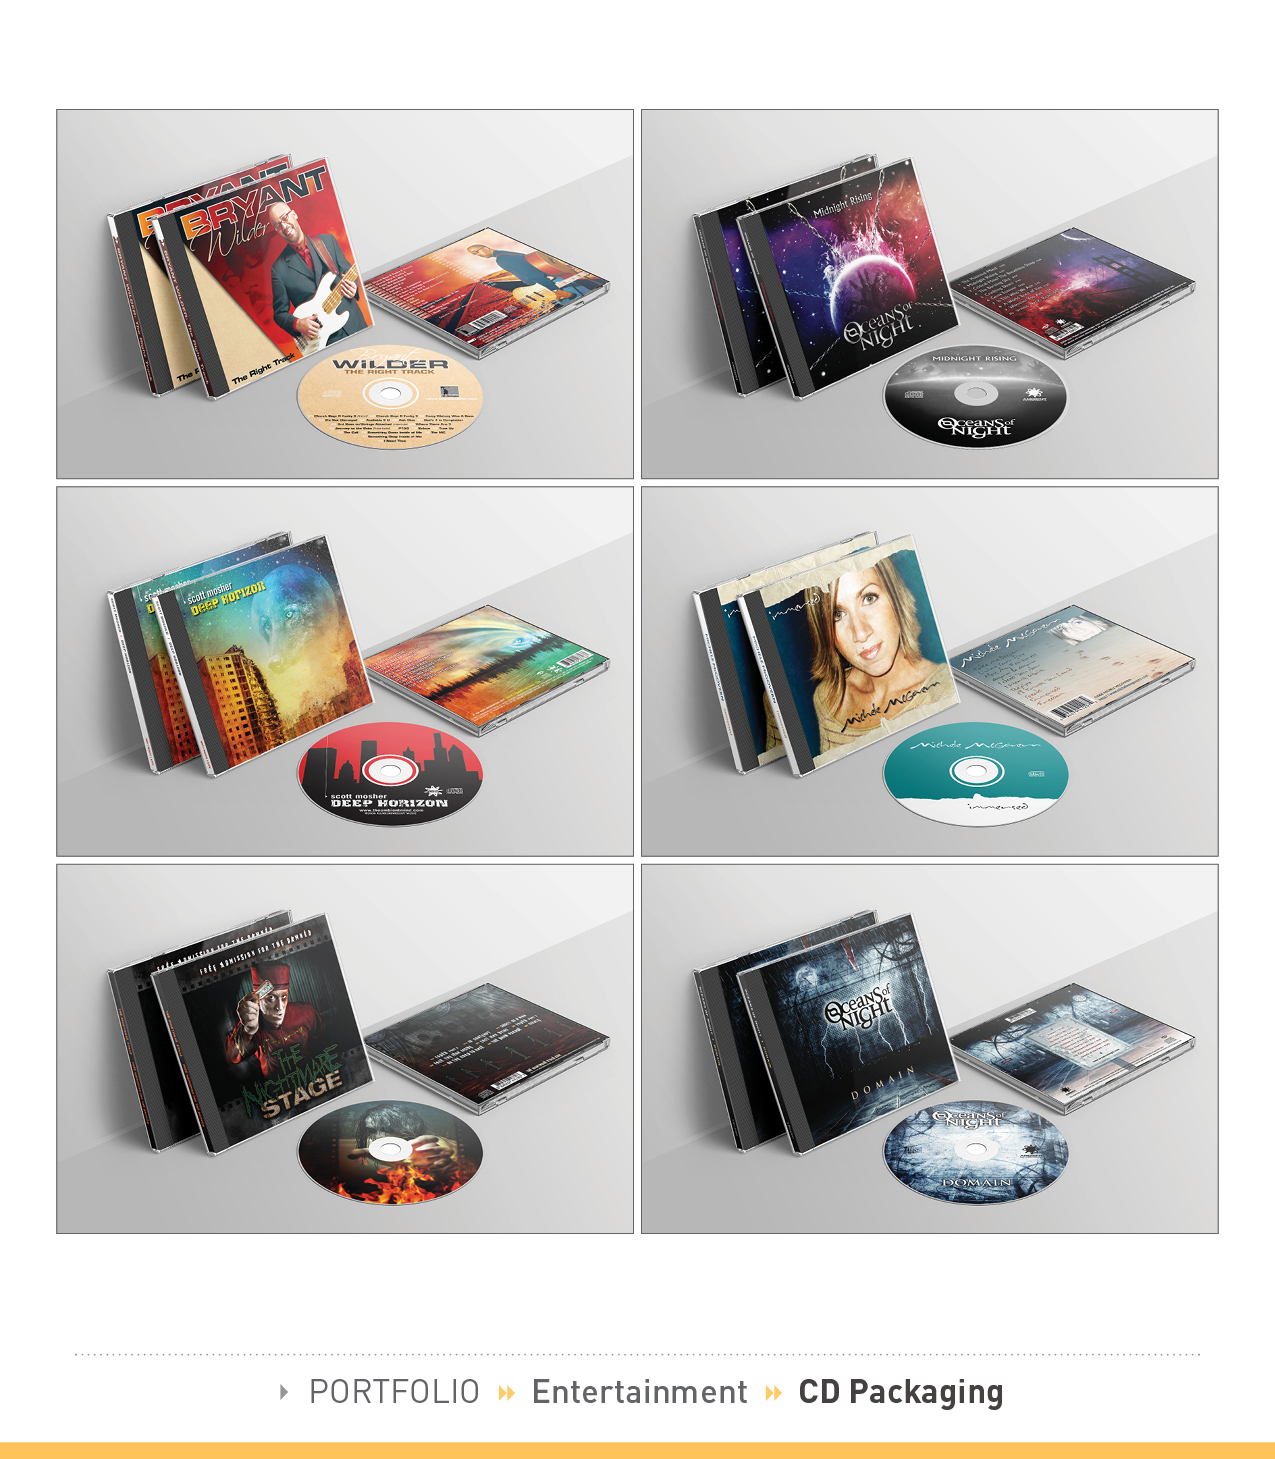 » PORTFOLIO » Entertainment » CD Packaging